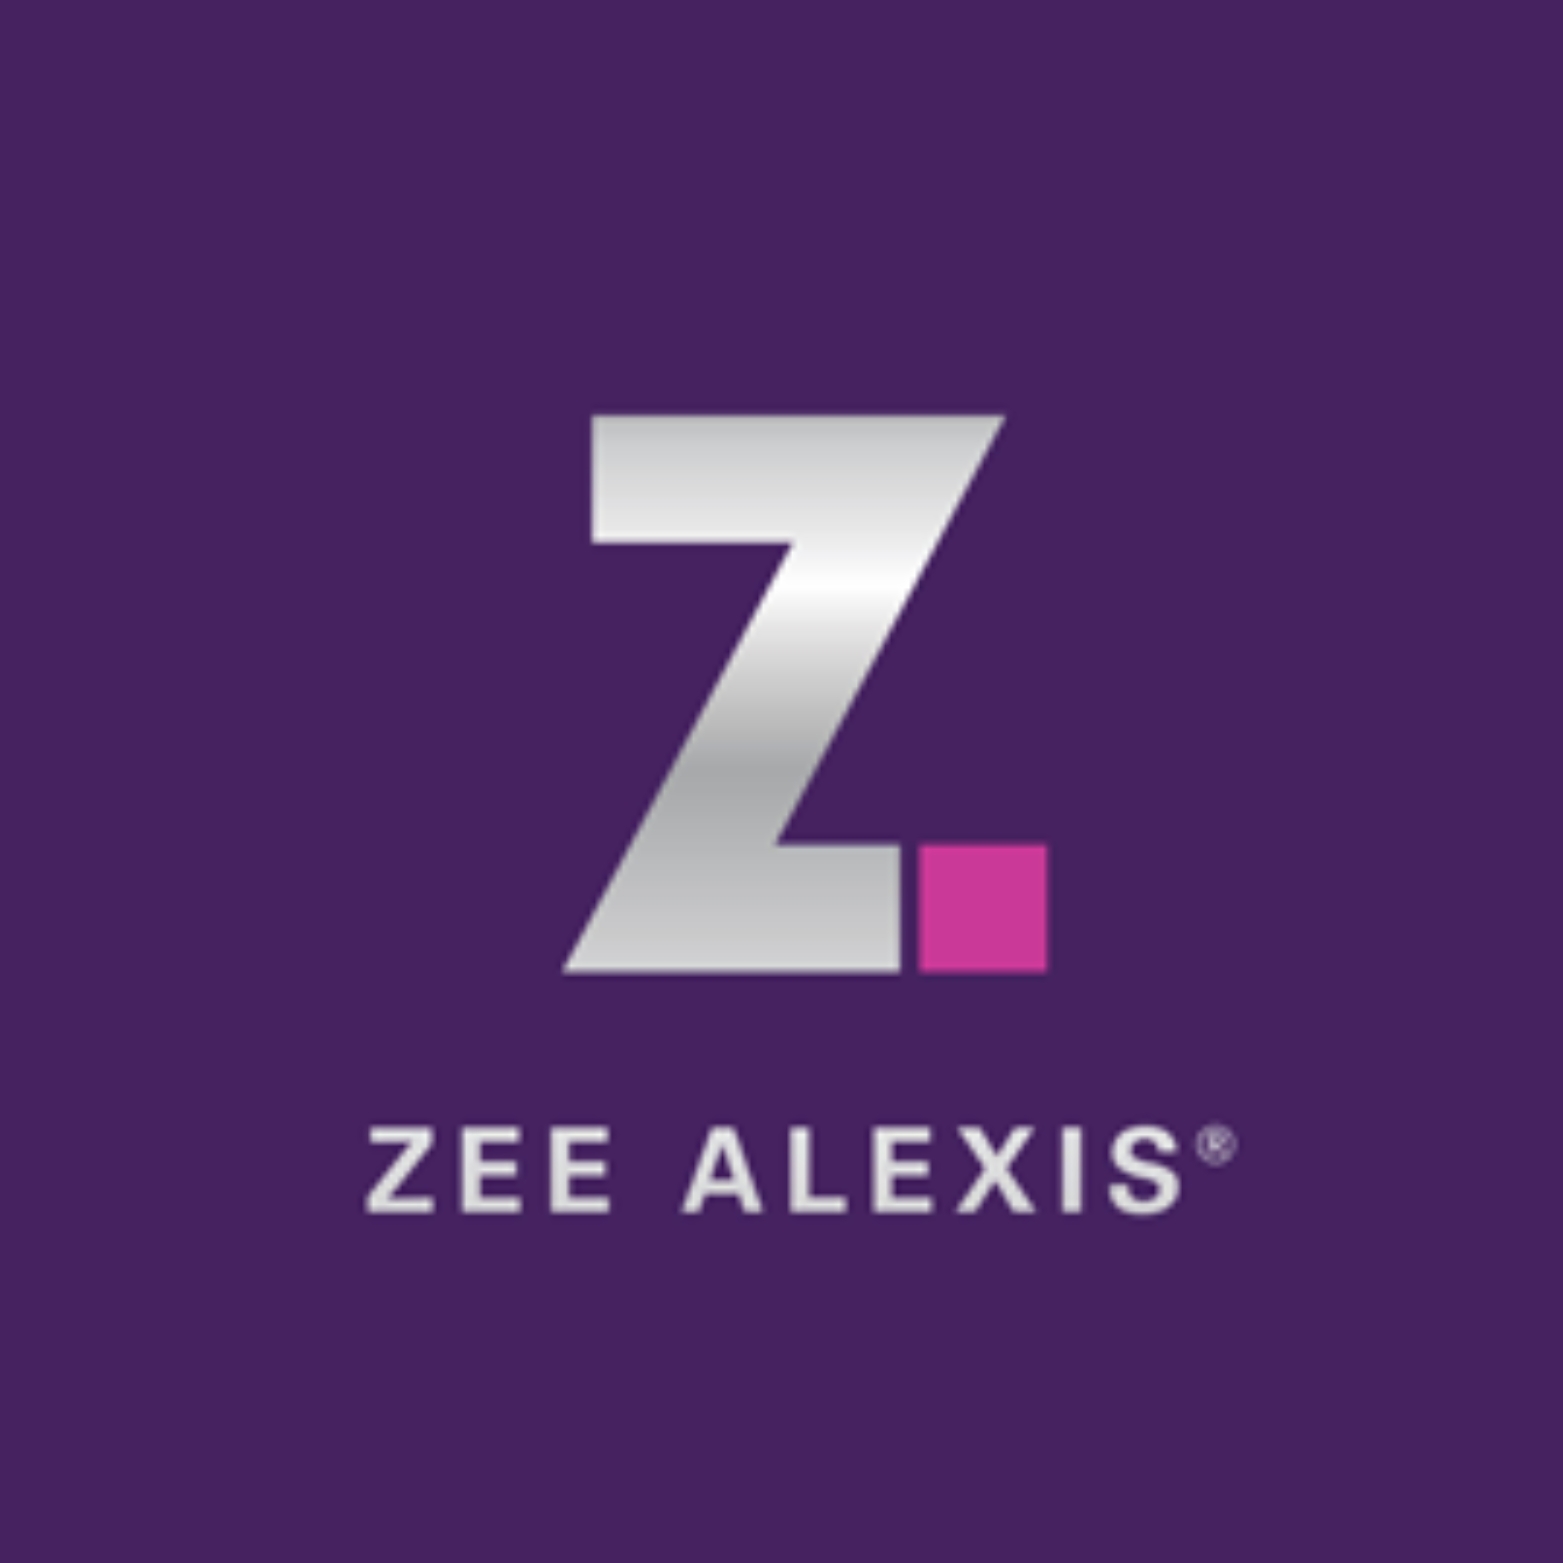 Zee Alexis